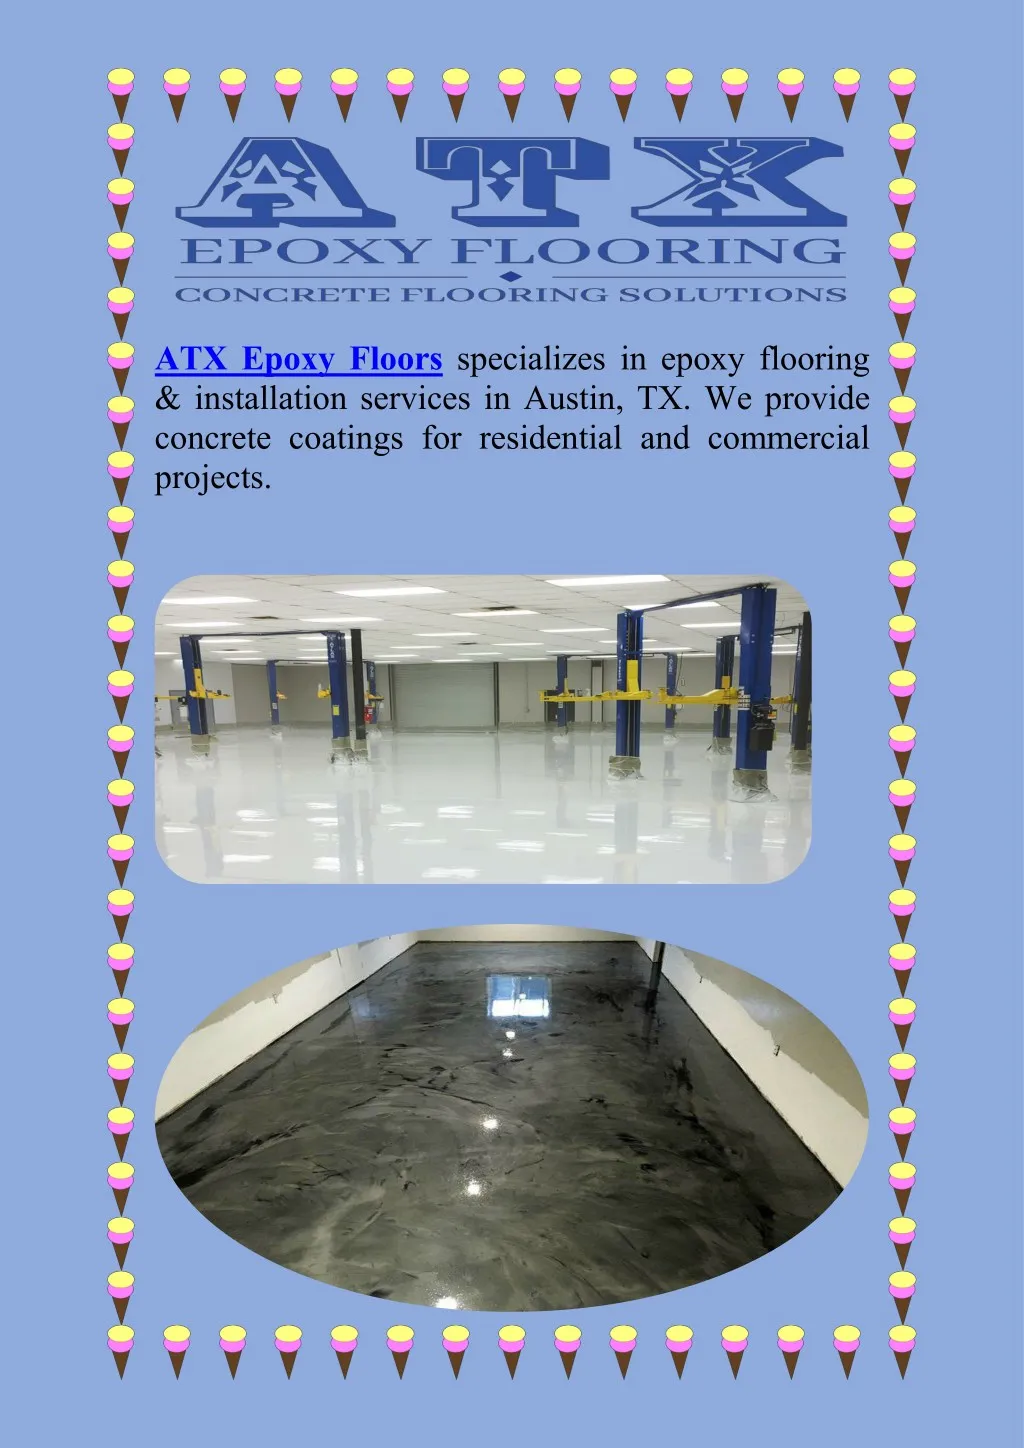 atx epoxy floors specializes in epoxy flooring n.